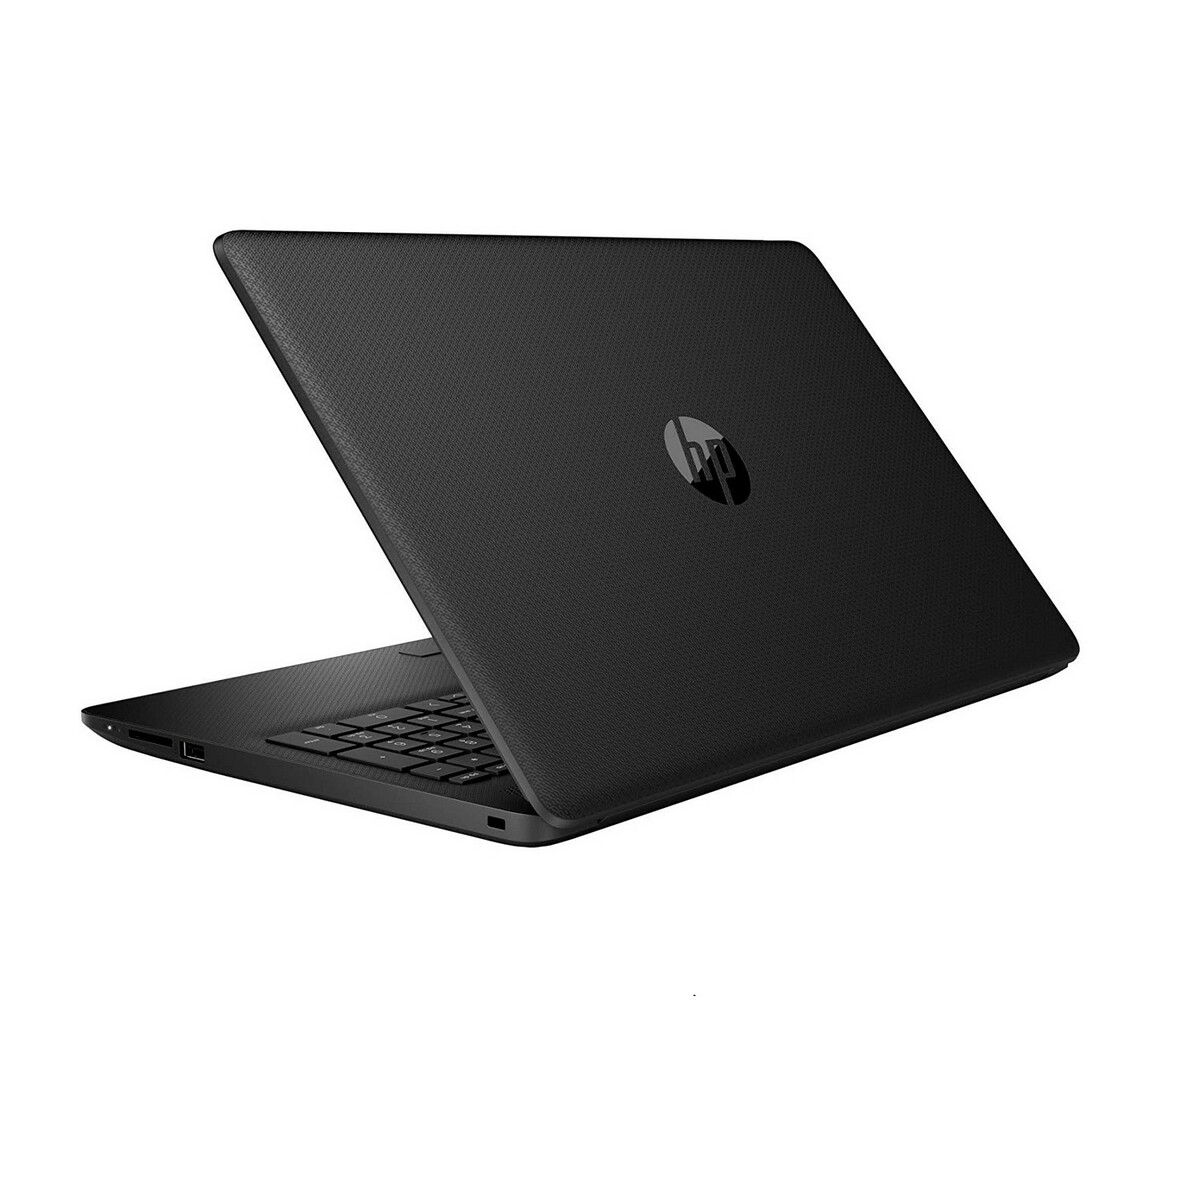 HP Notebook DB1069AU AMD R3 15" Win10 Black + MS Office